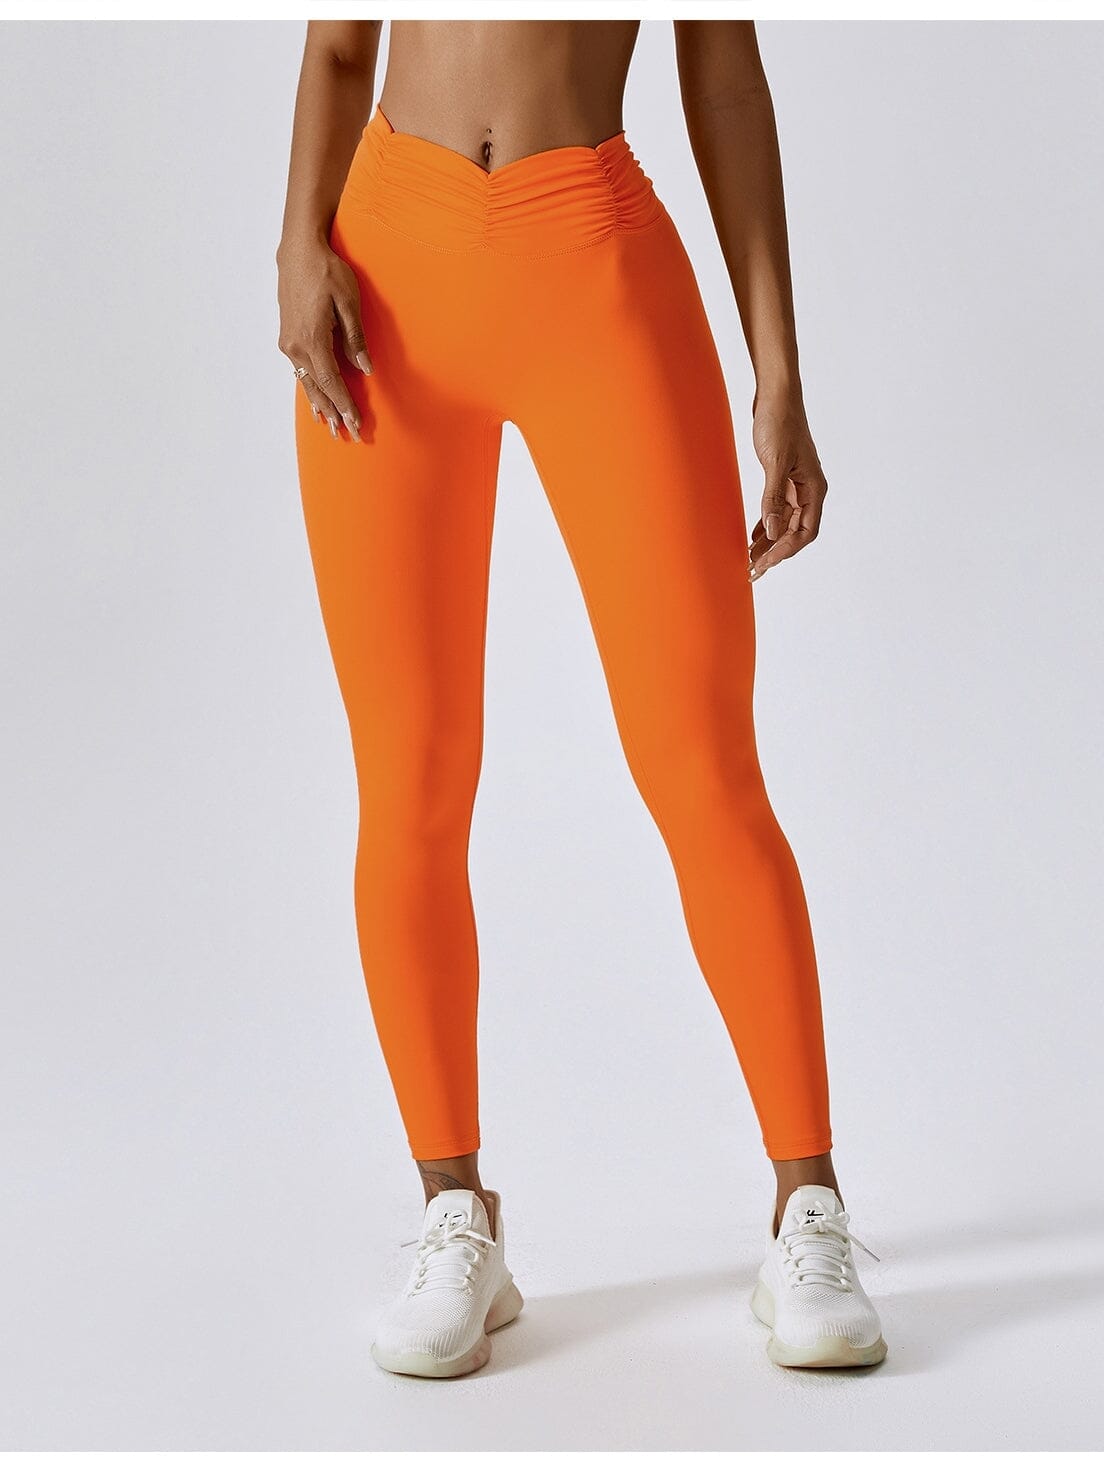 Legging CrossFit, Fitness, Push Up - Julia Leggings Ultime Legging S Orange 